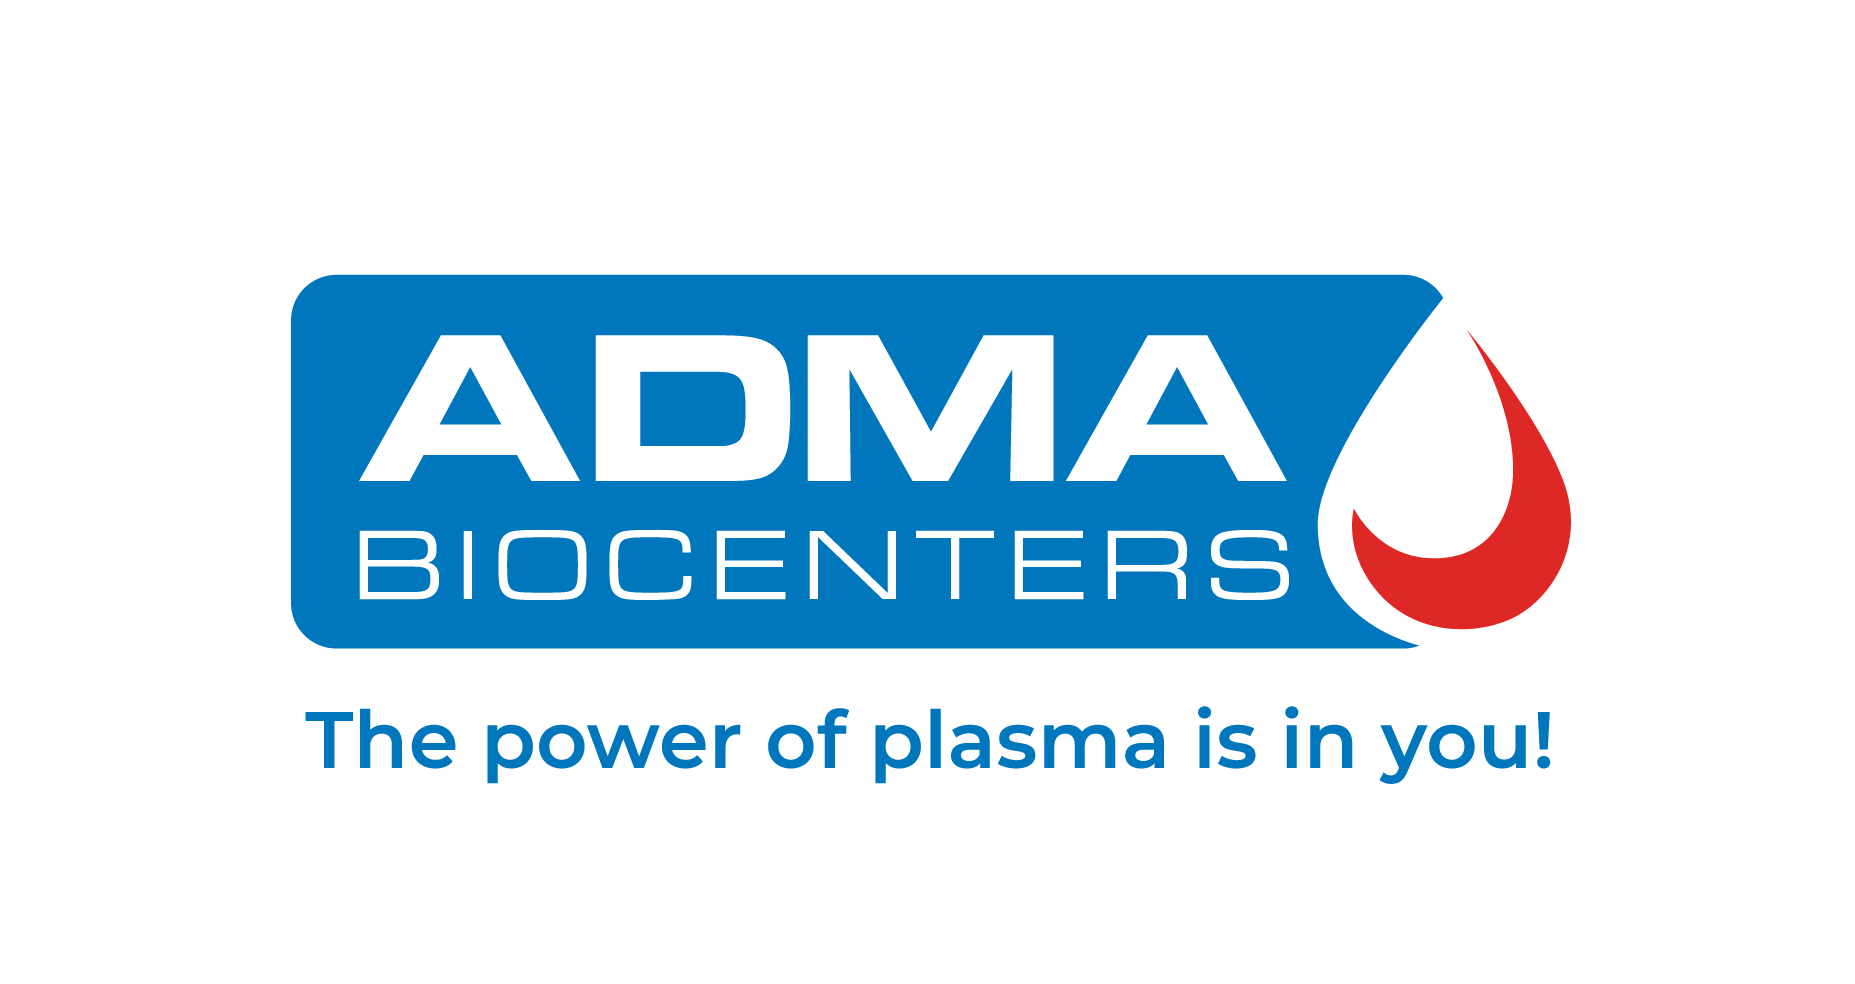 ADMA BioCenters